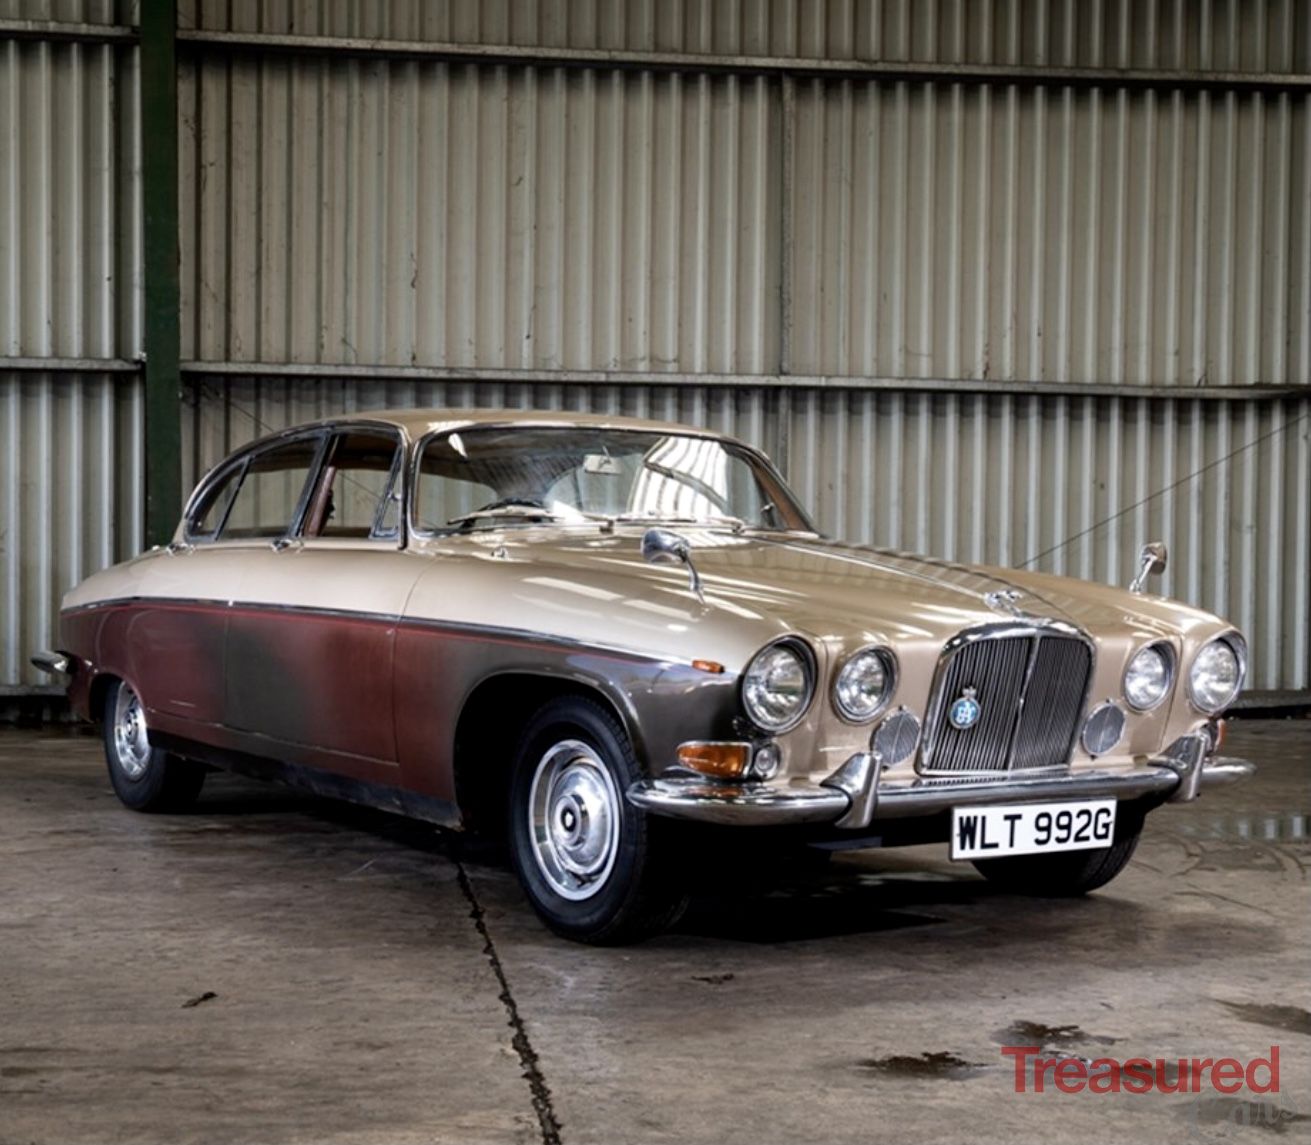 1968 Jaguar 420 G Classic Cars for sale - Treasured Cars